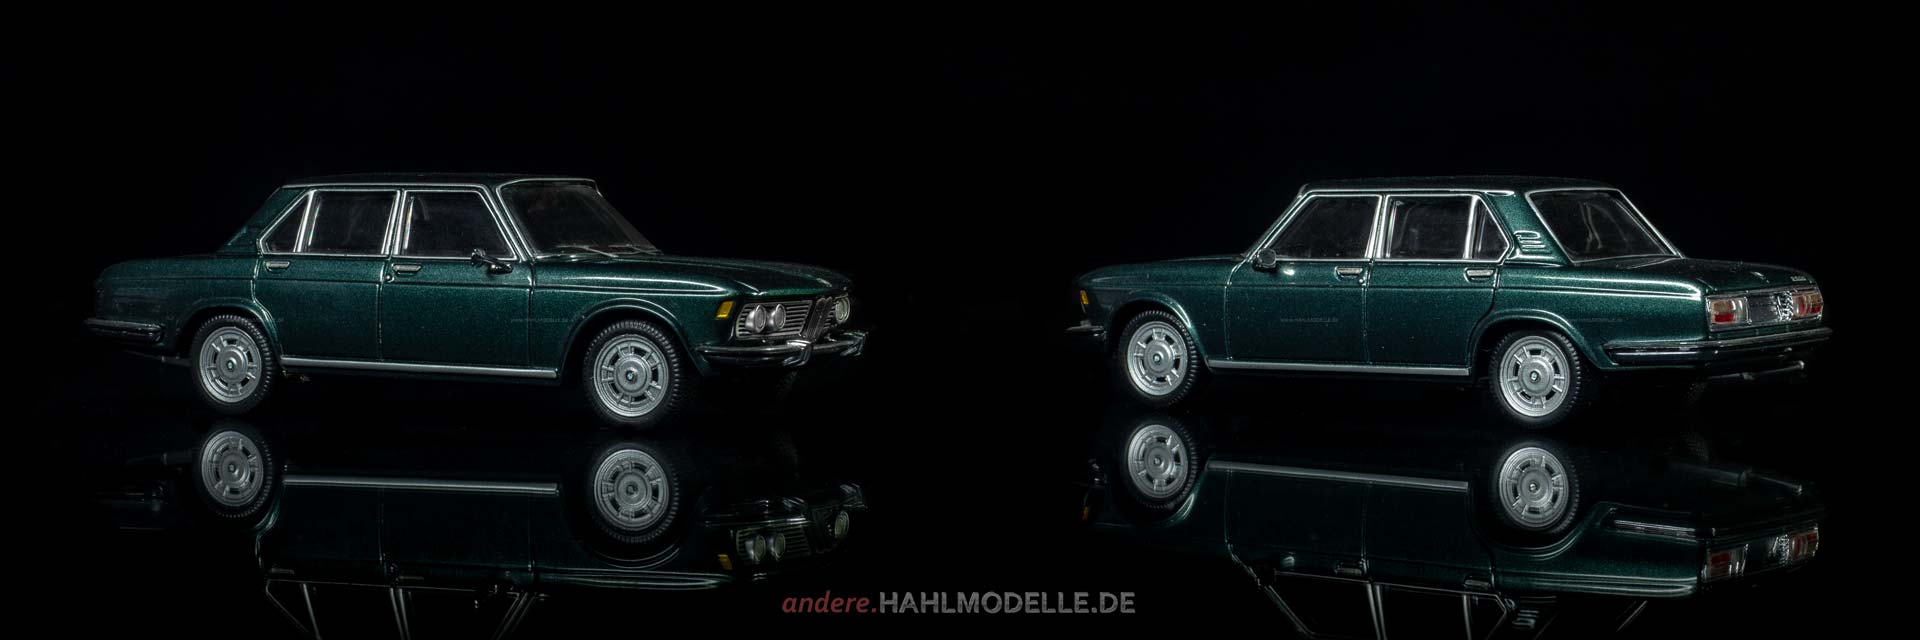 BMW 2500 (E3) | Limousine | Schuco | www.andere.hahlmodelle.de